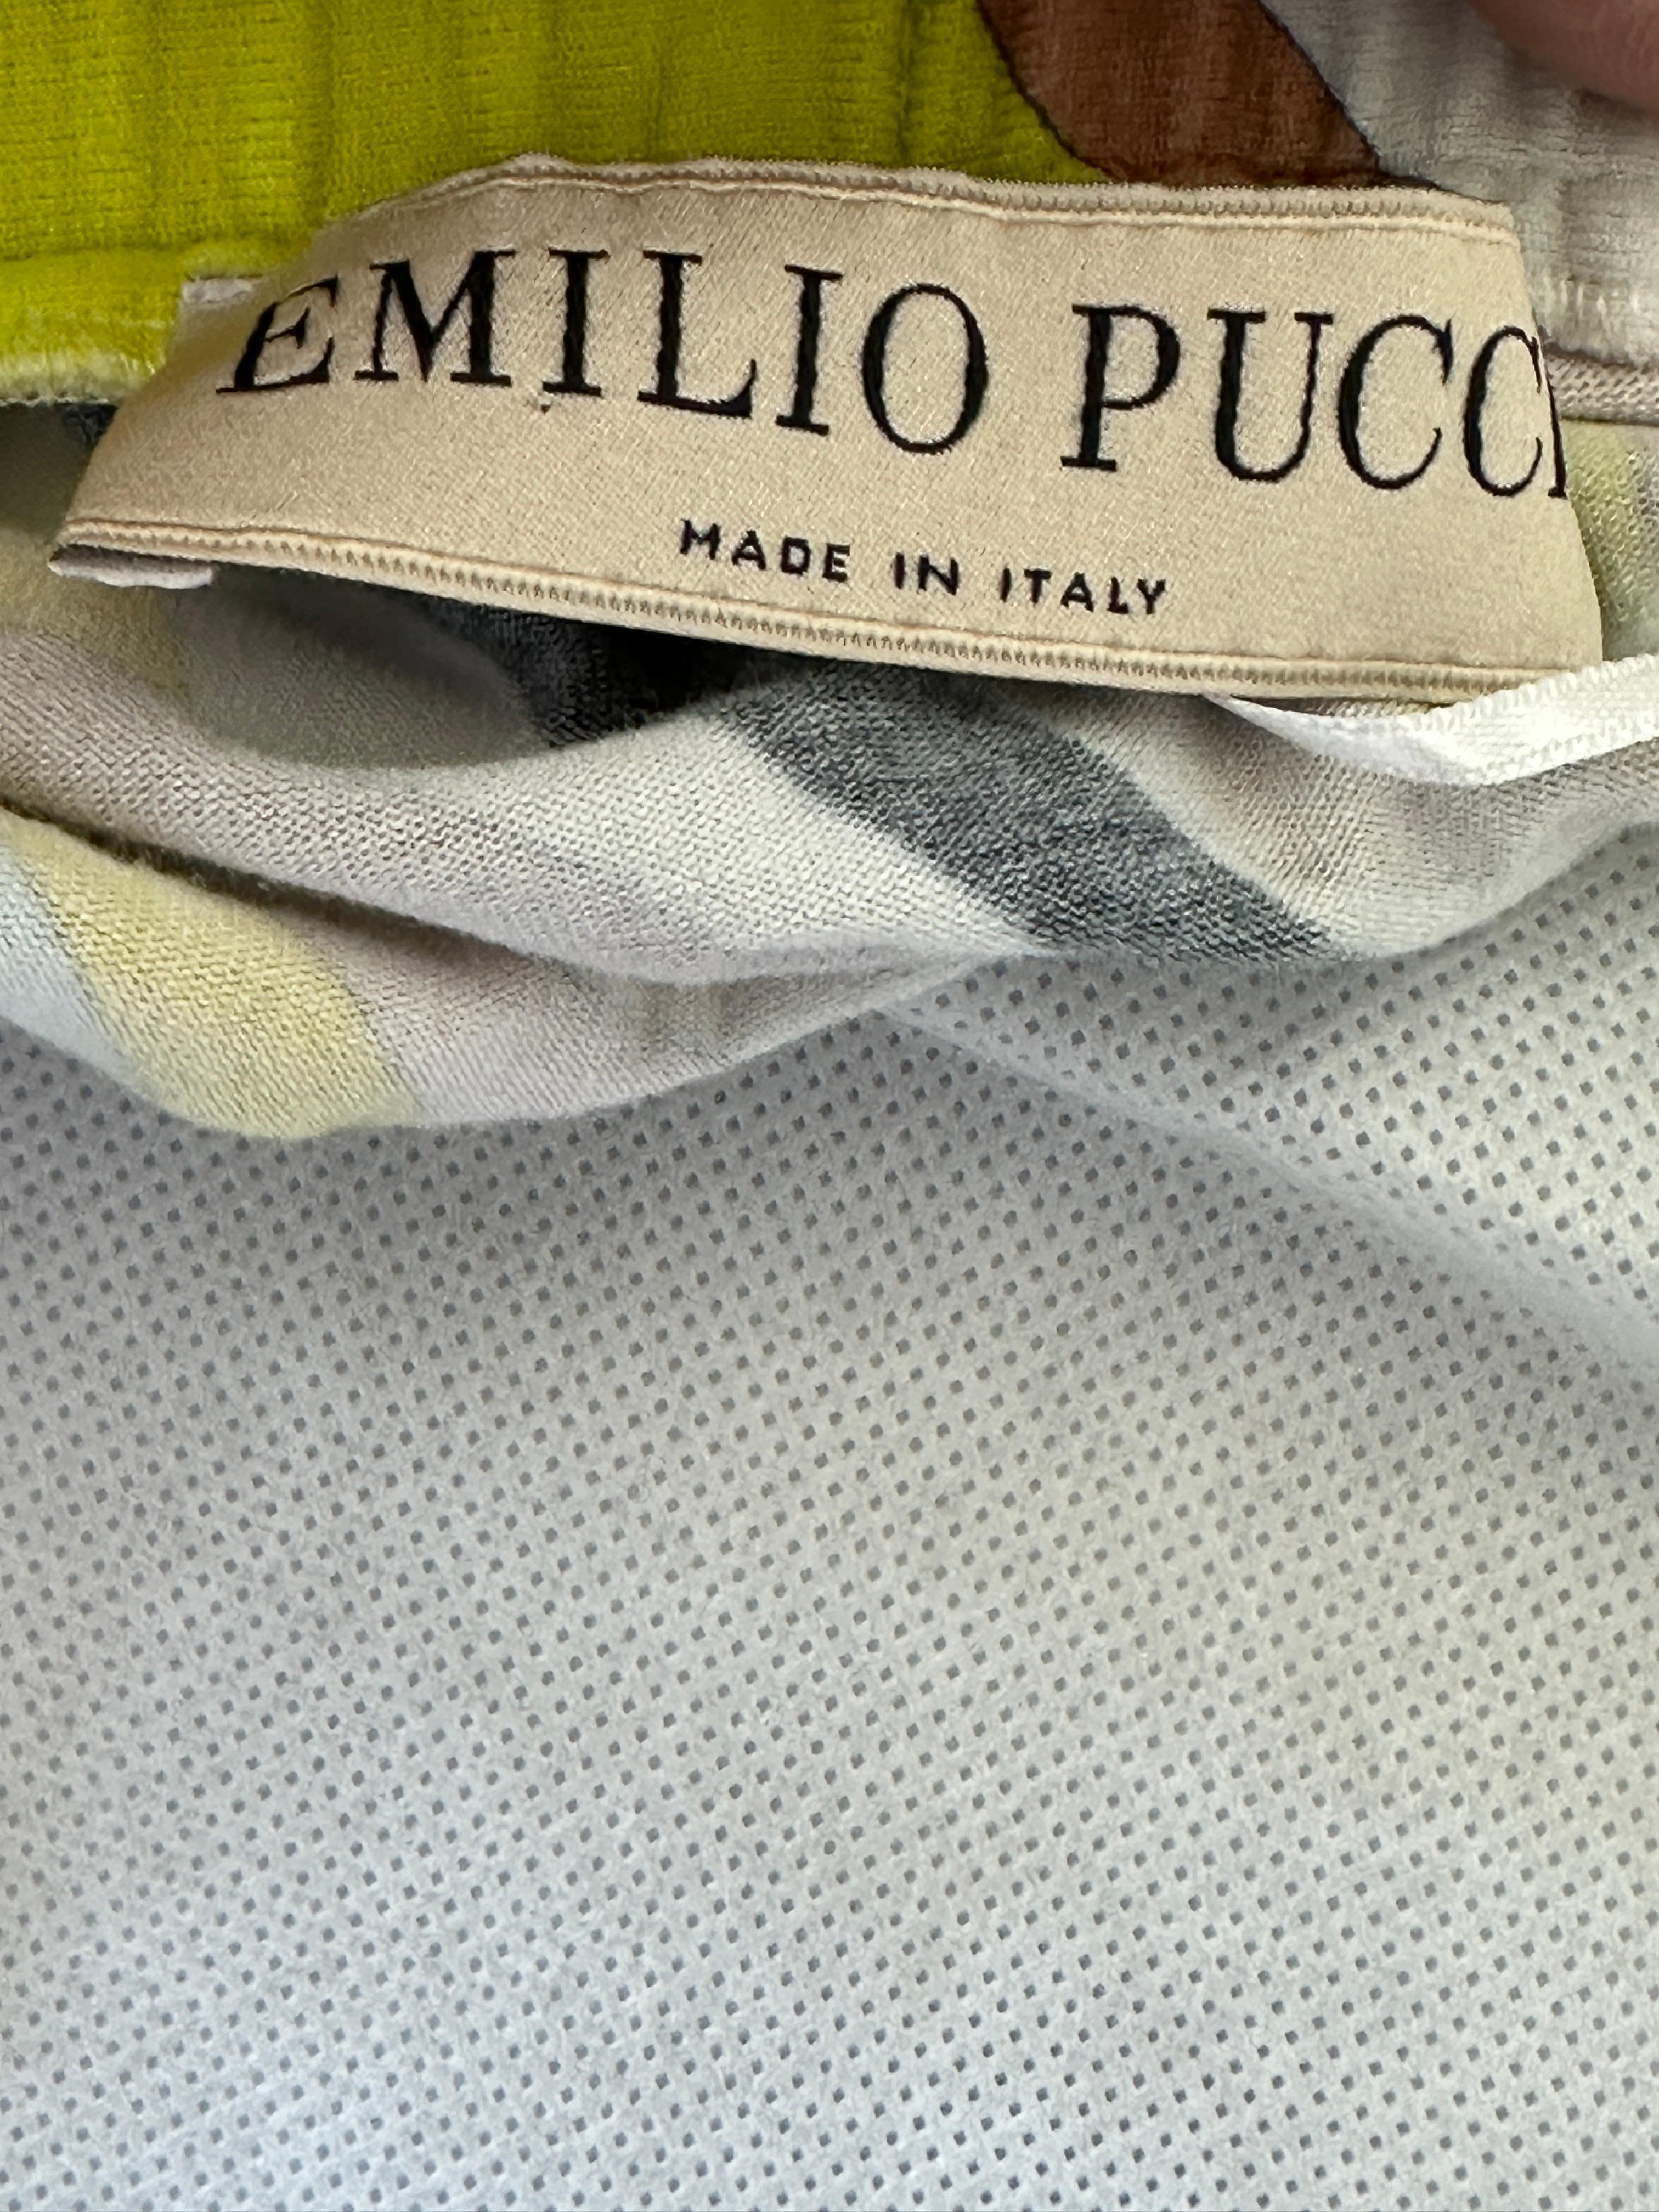 Emilio Pucci Colorful Vintage Low Cut Backless Maxi Dress  6